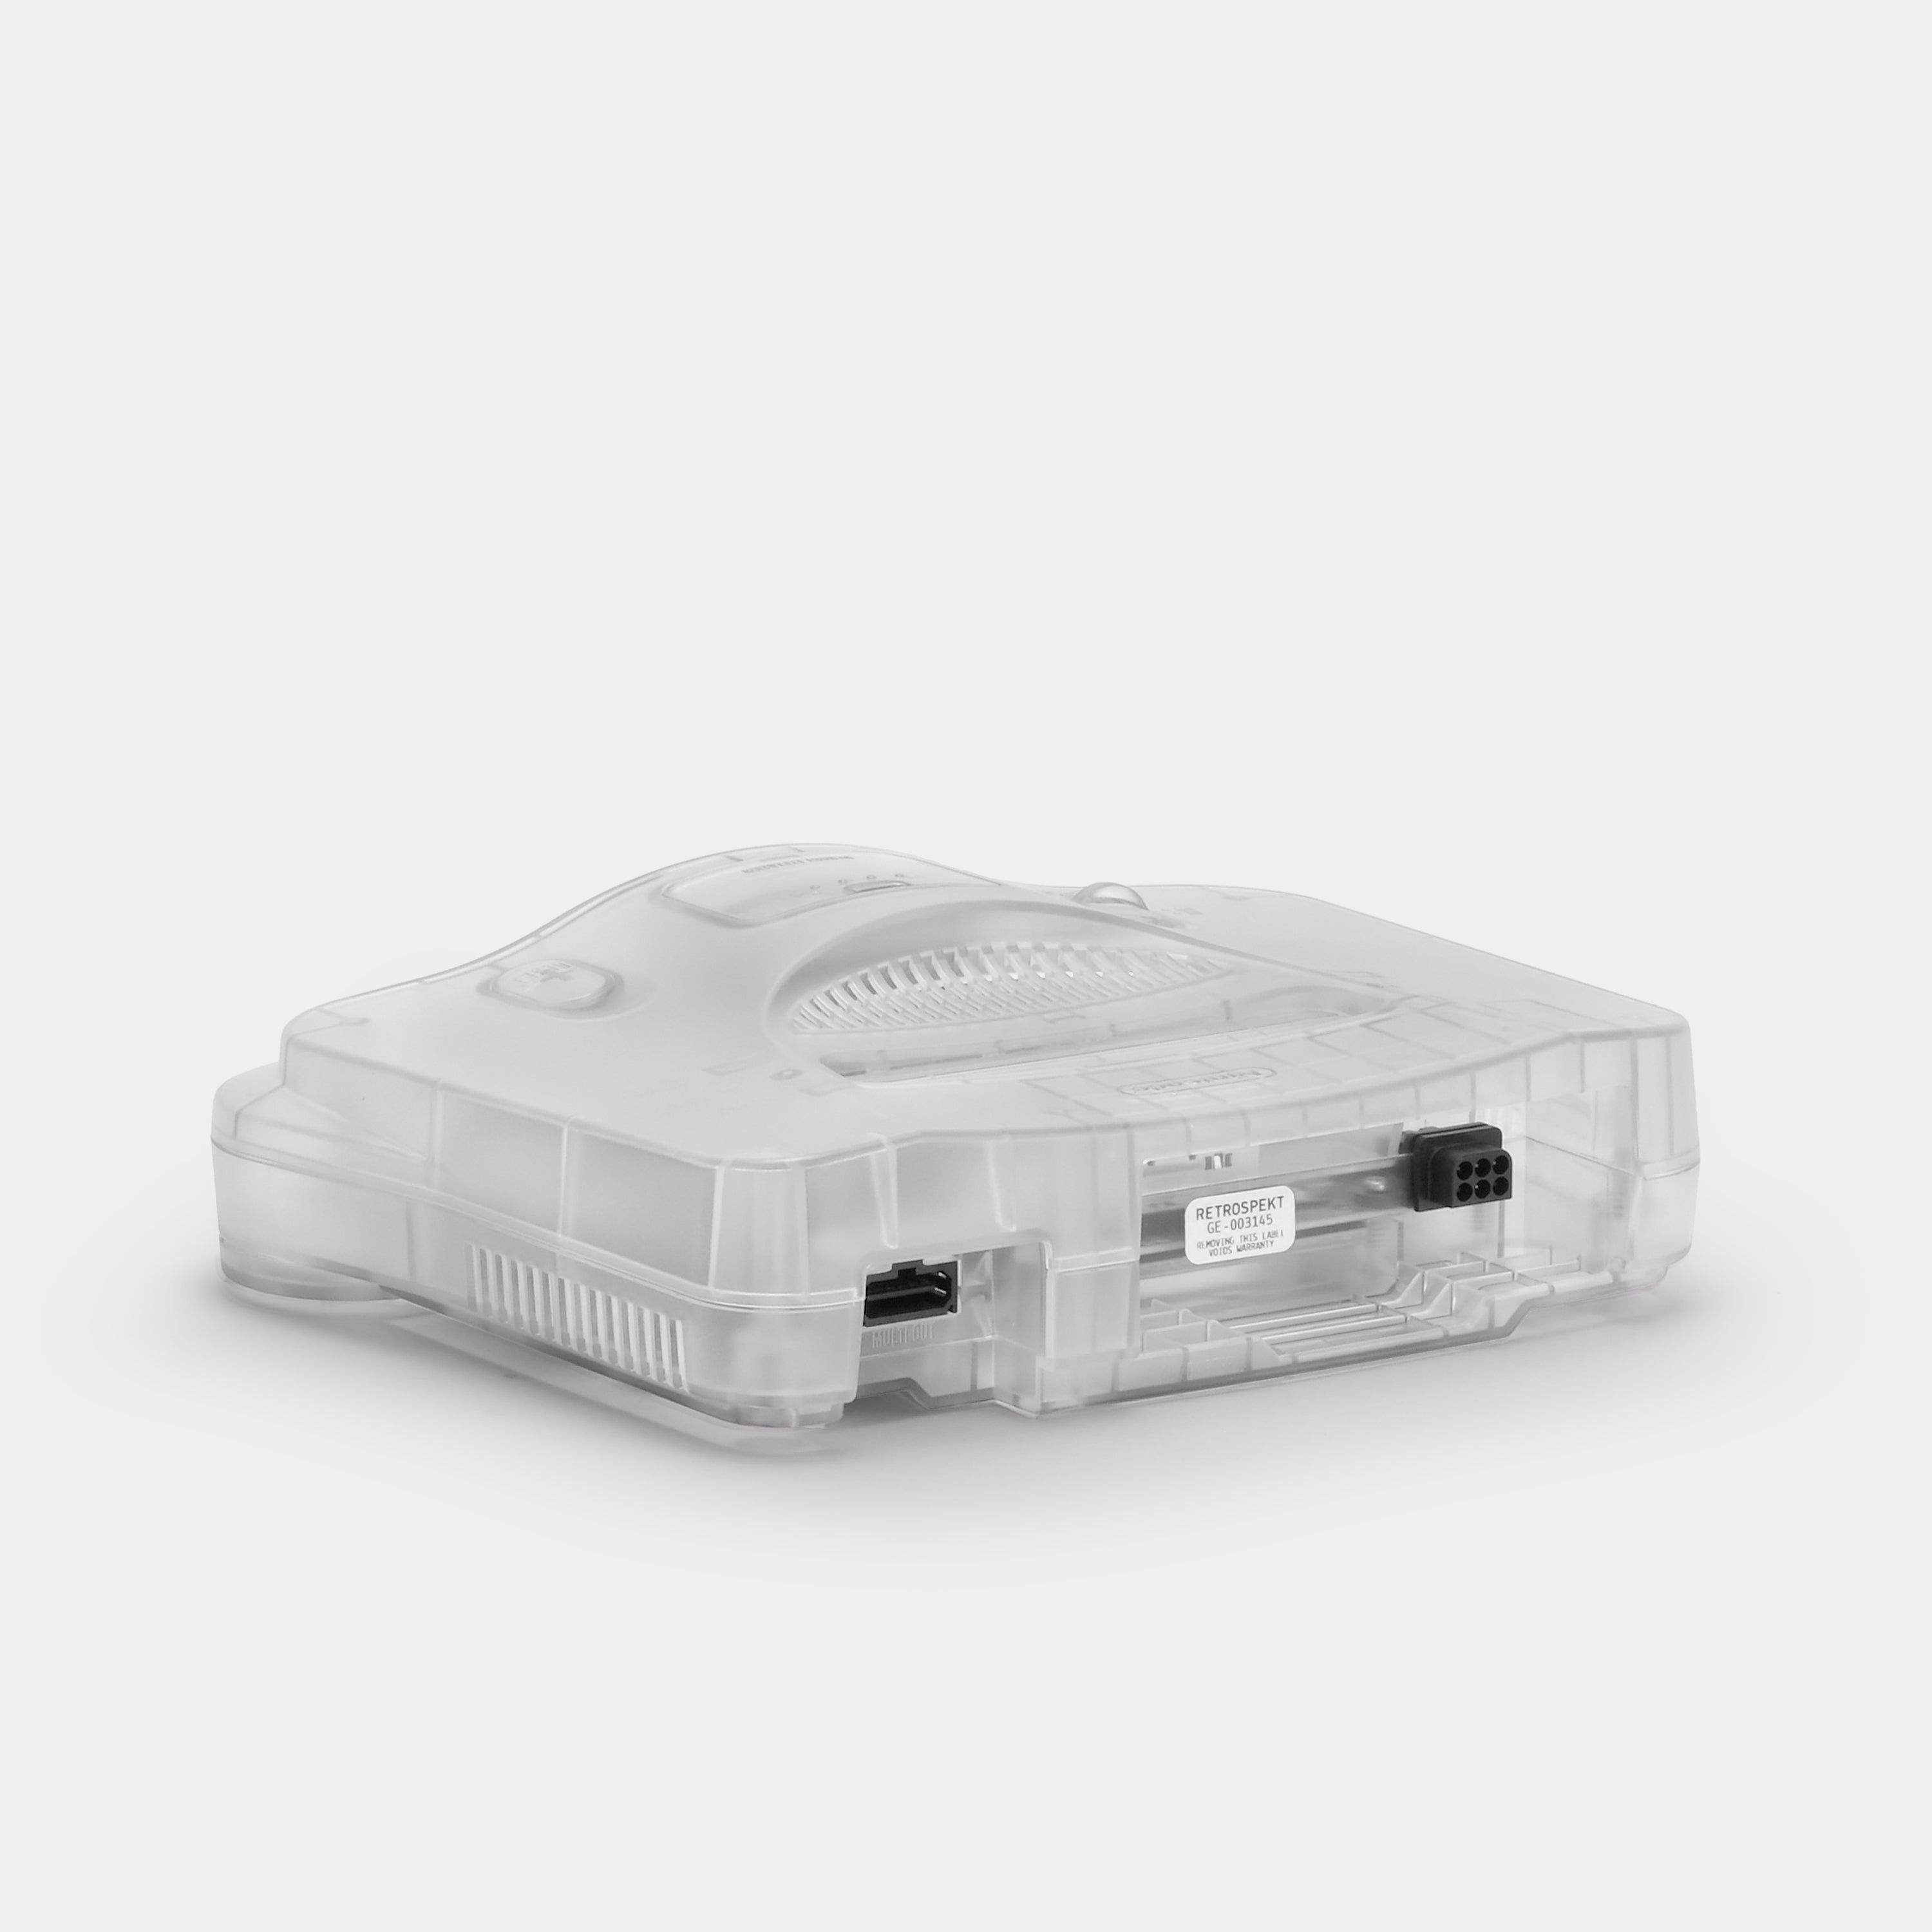 Nintendo 64 Video Game Console